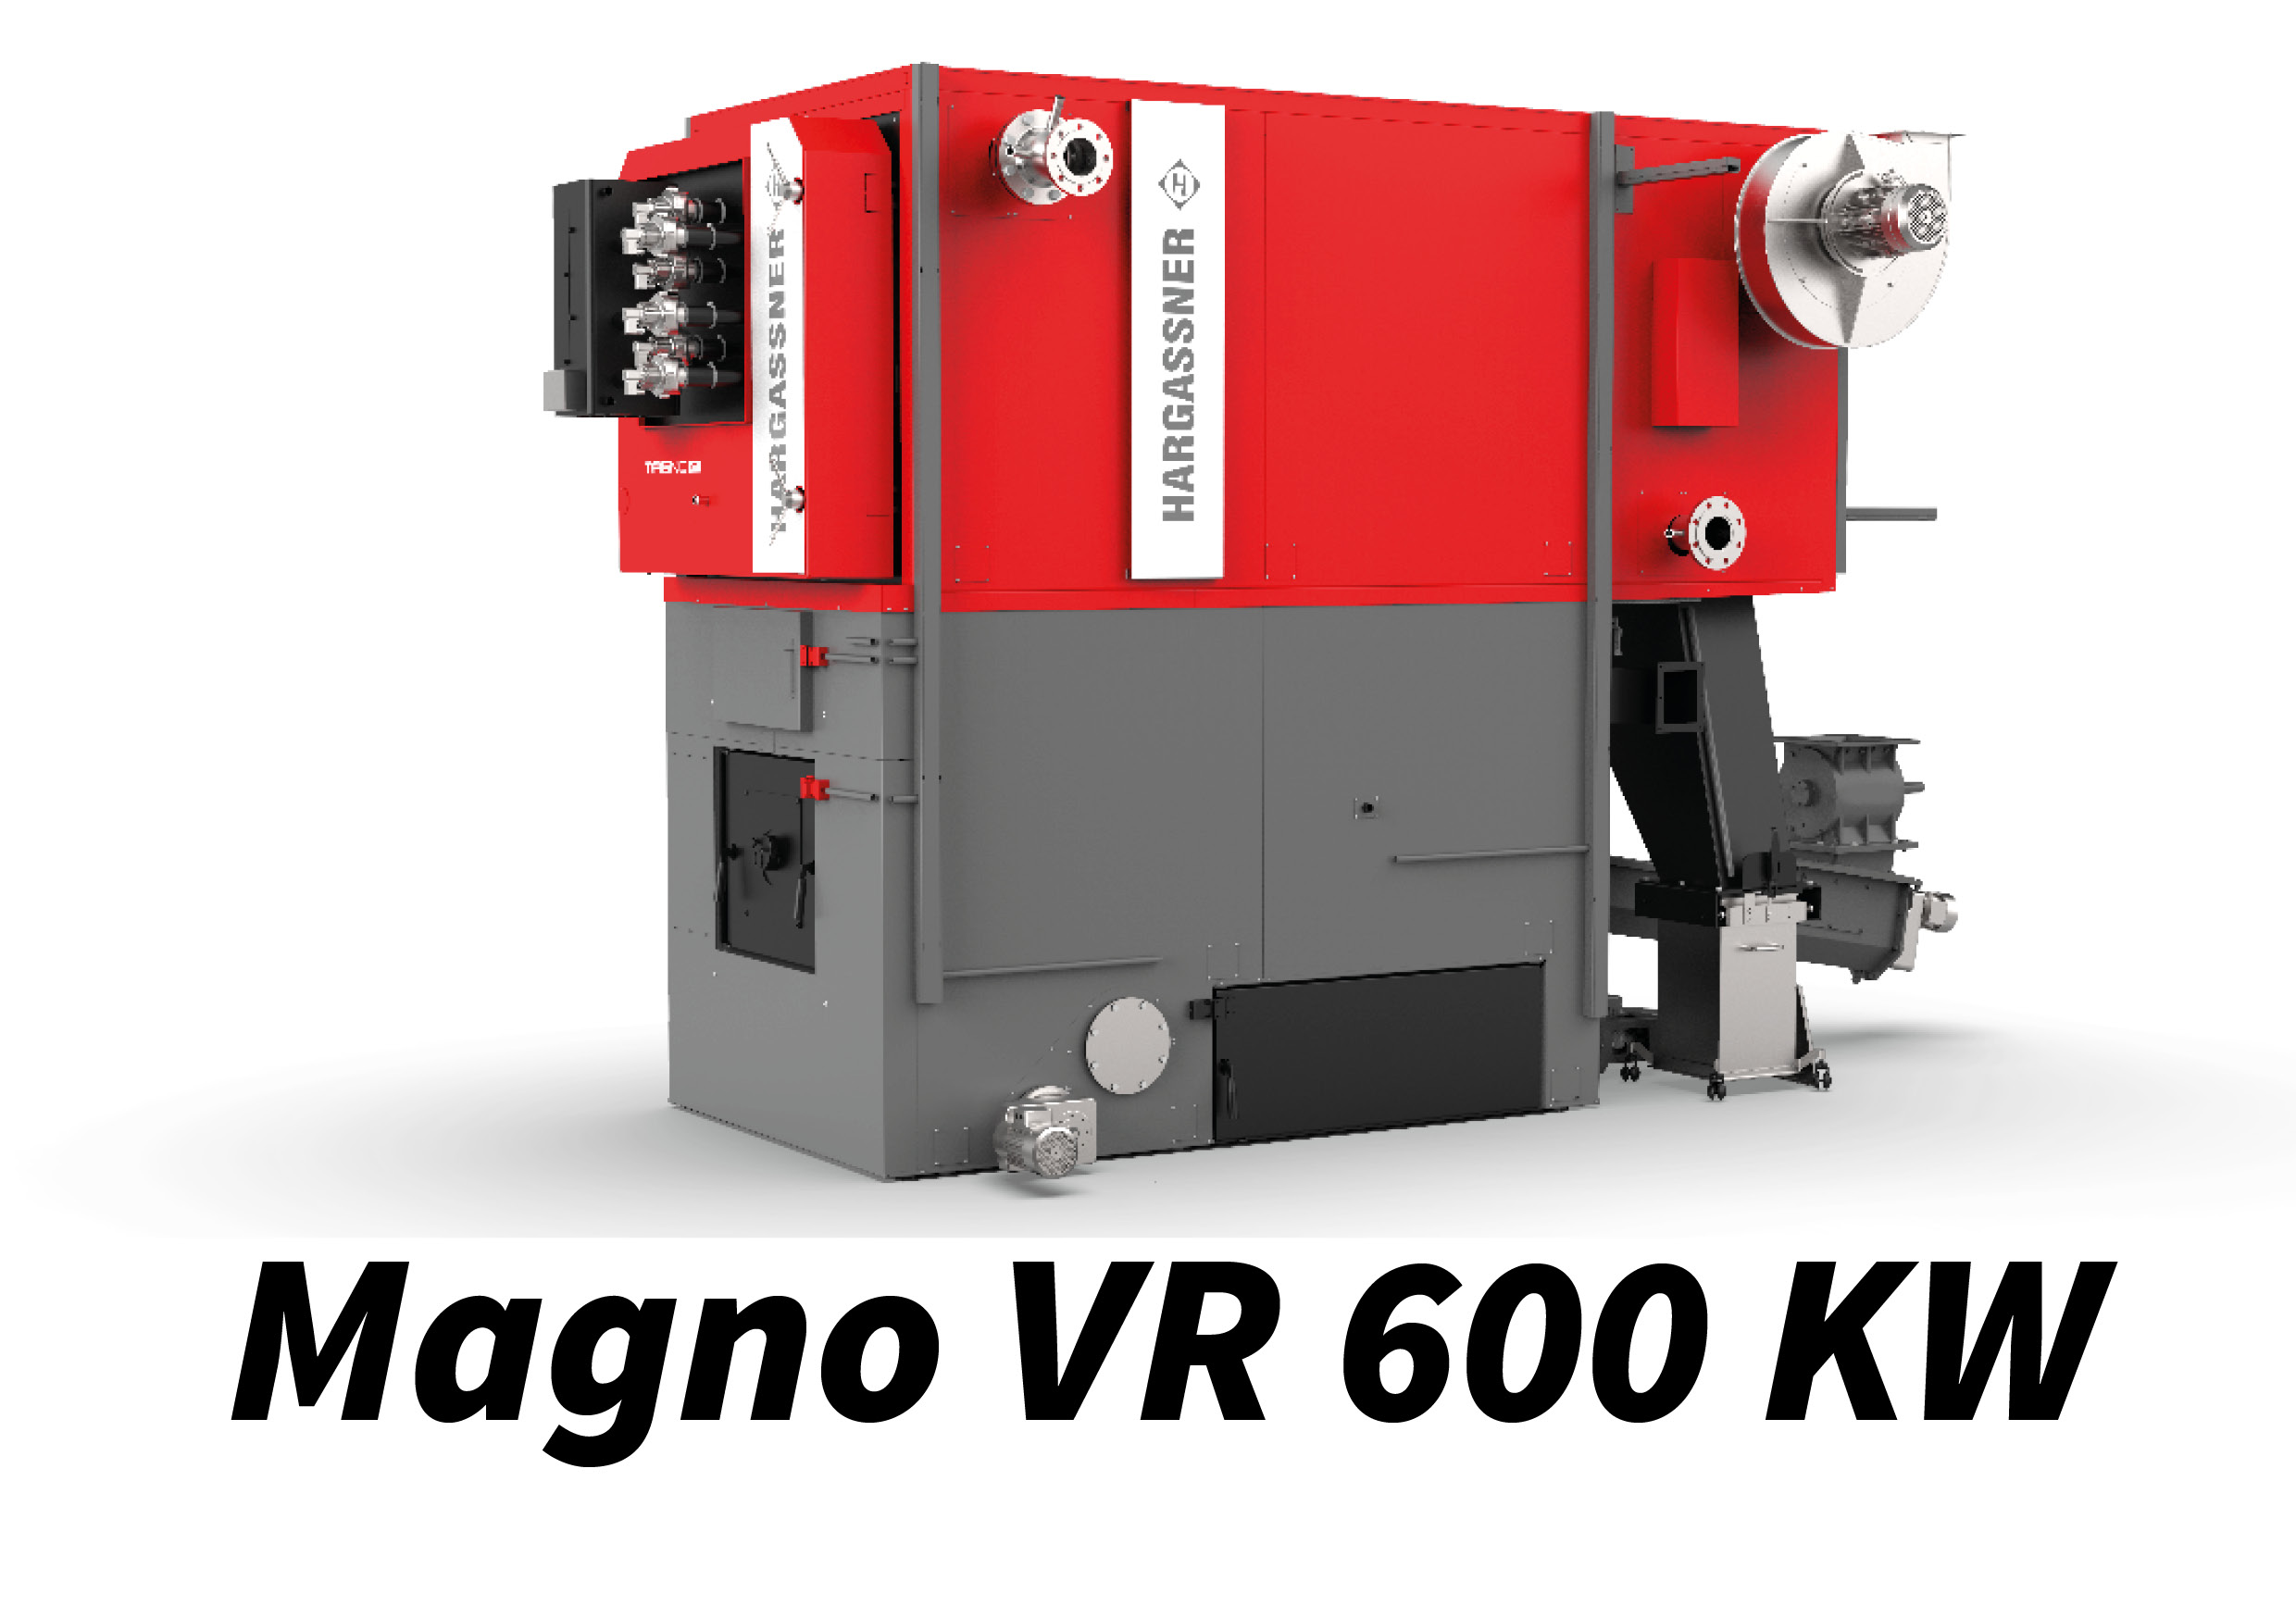 Magno VR 600 kW